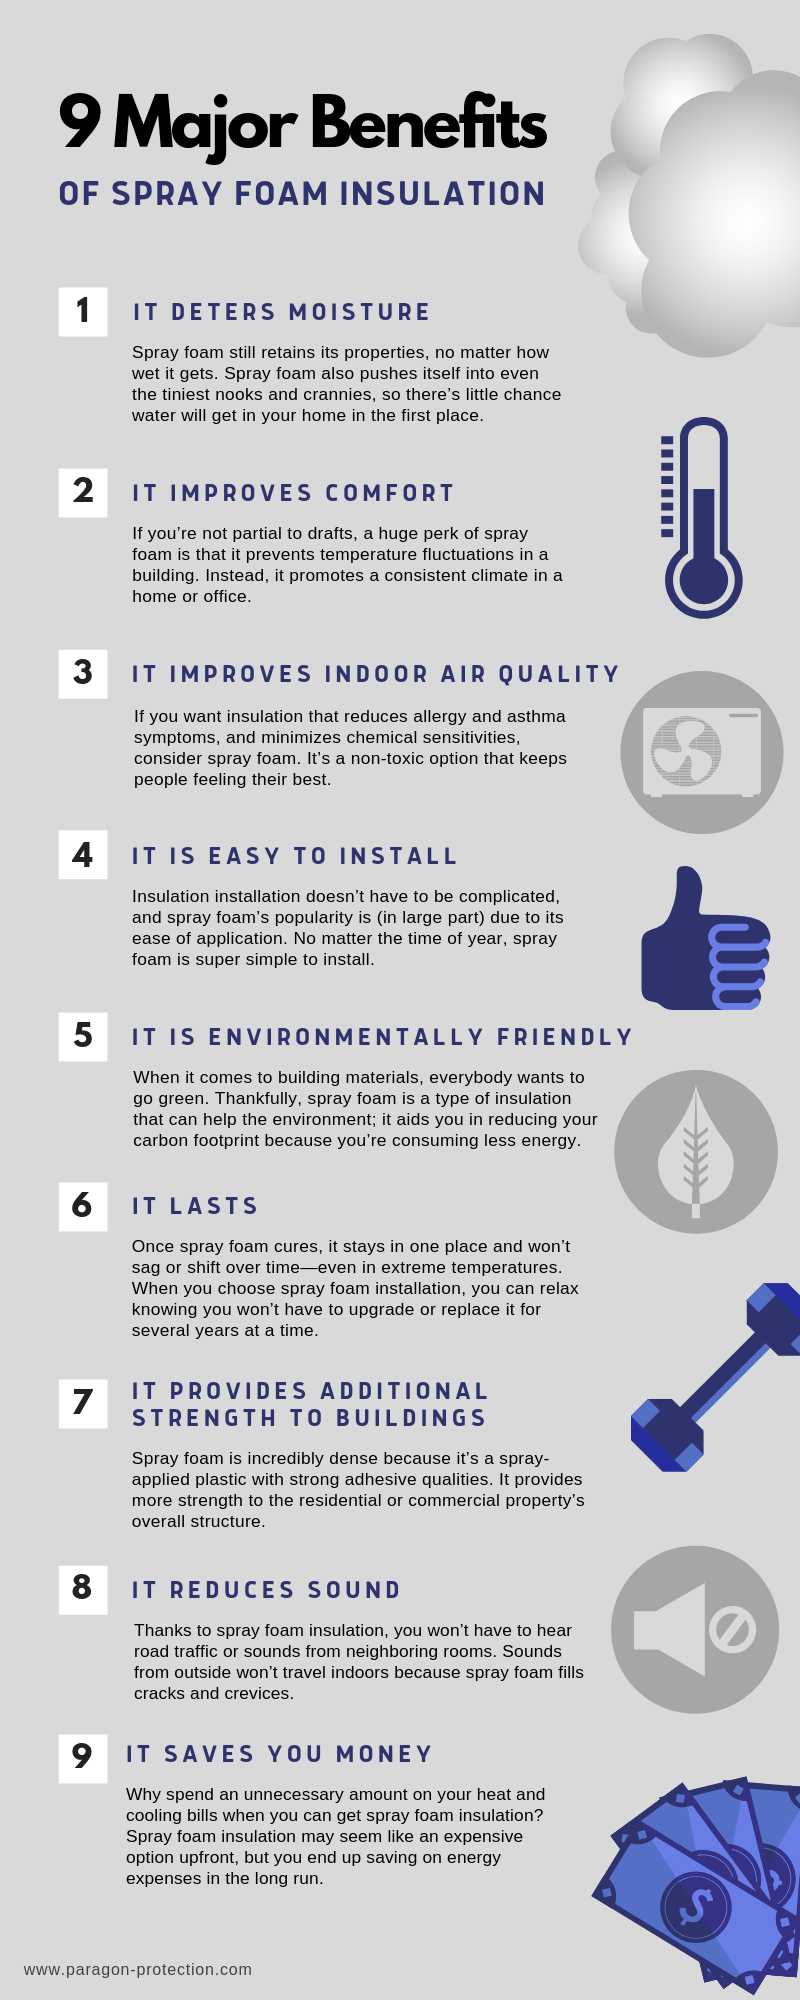 Benefits of Spray Foam Insulation information